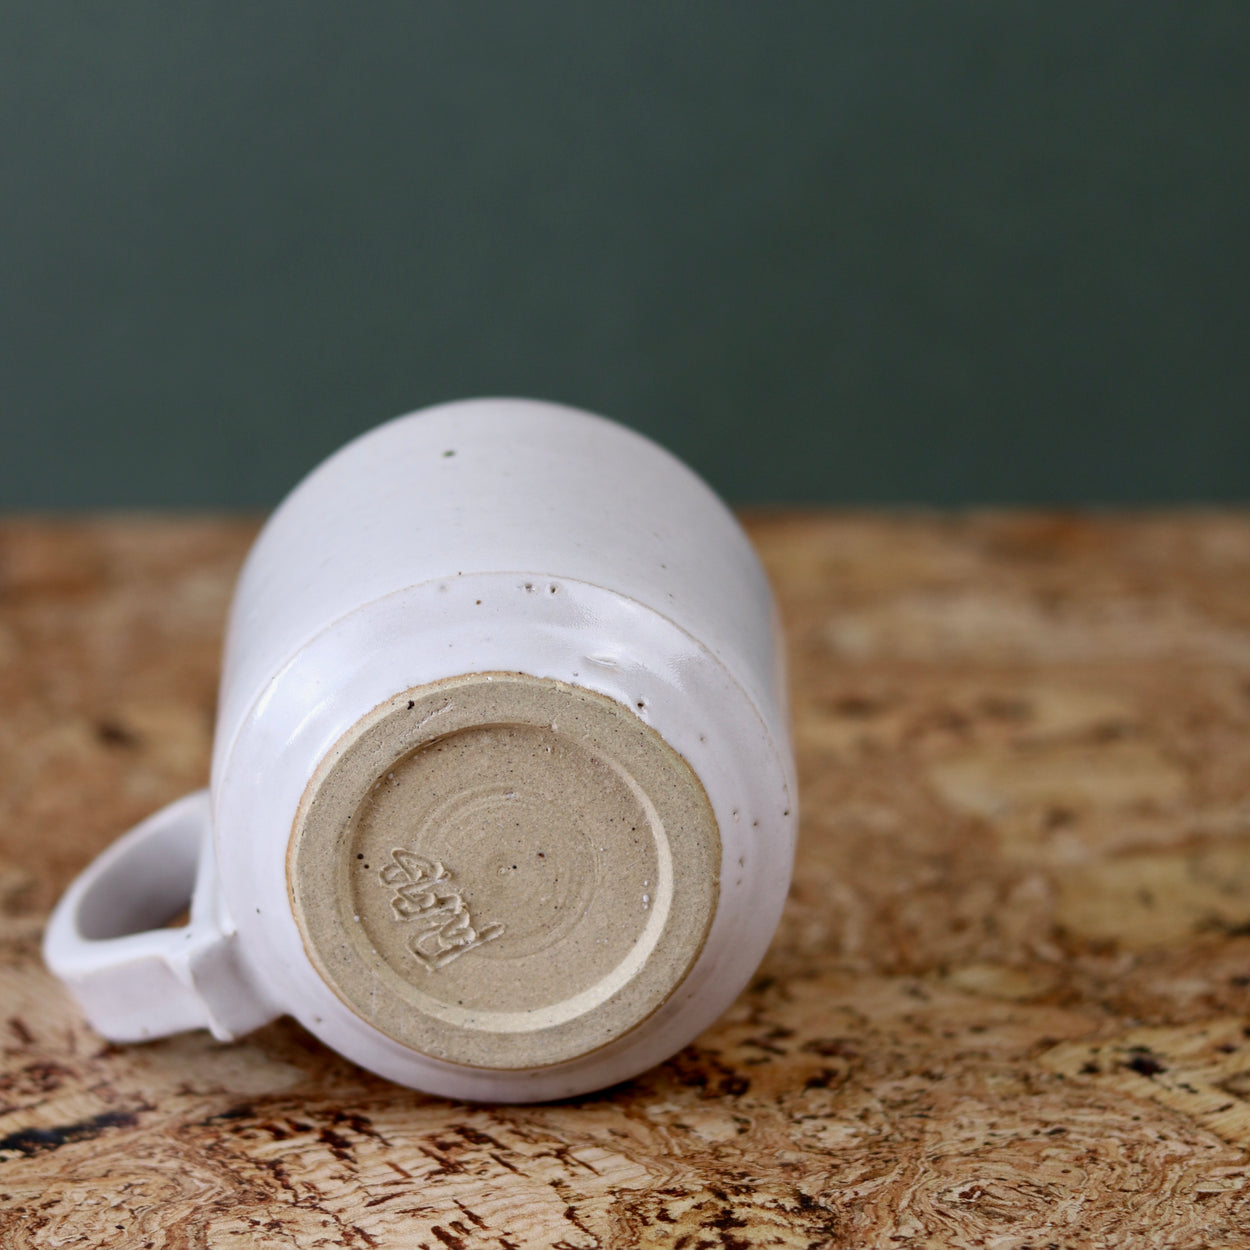 Handmade Ceramic Coffee Mug - Large by Richard Beauchamp, base view, on cork background.